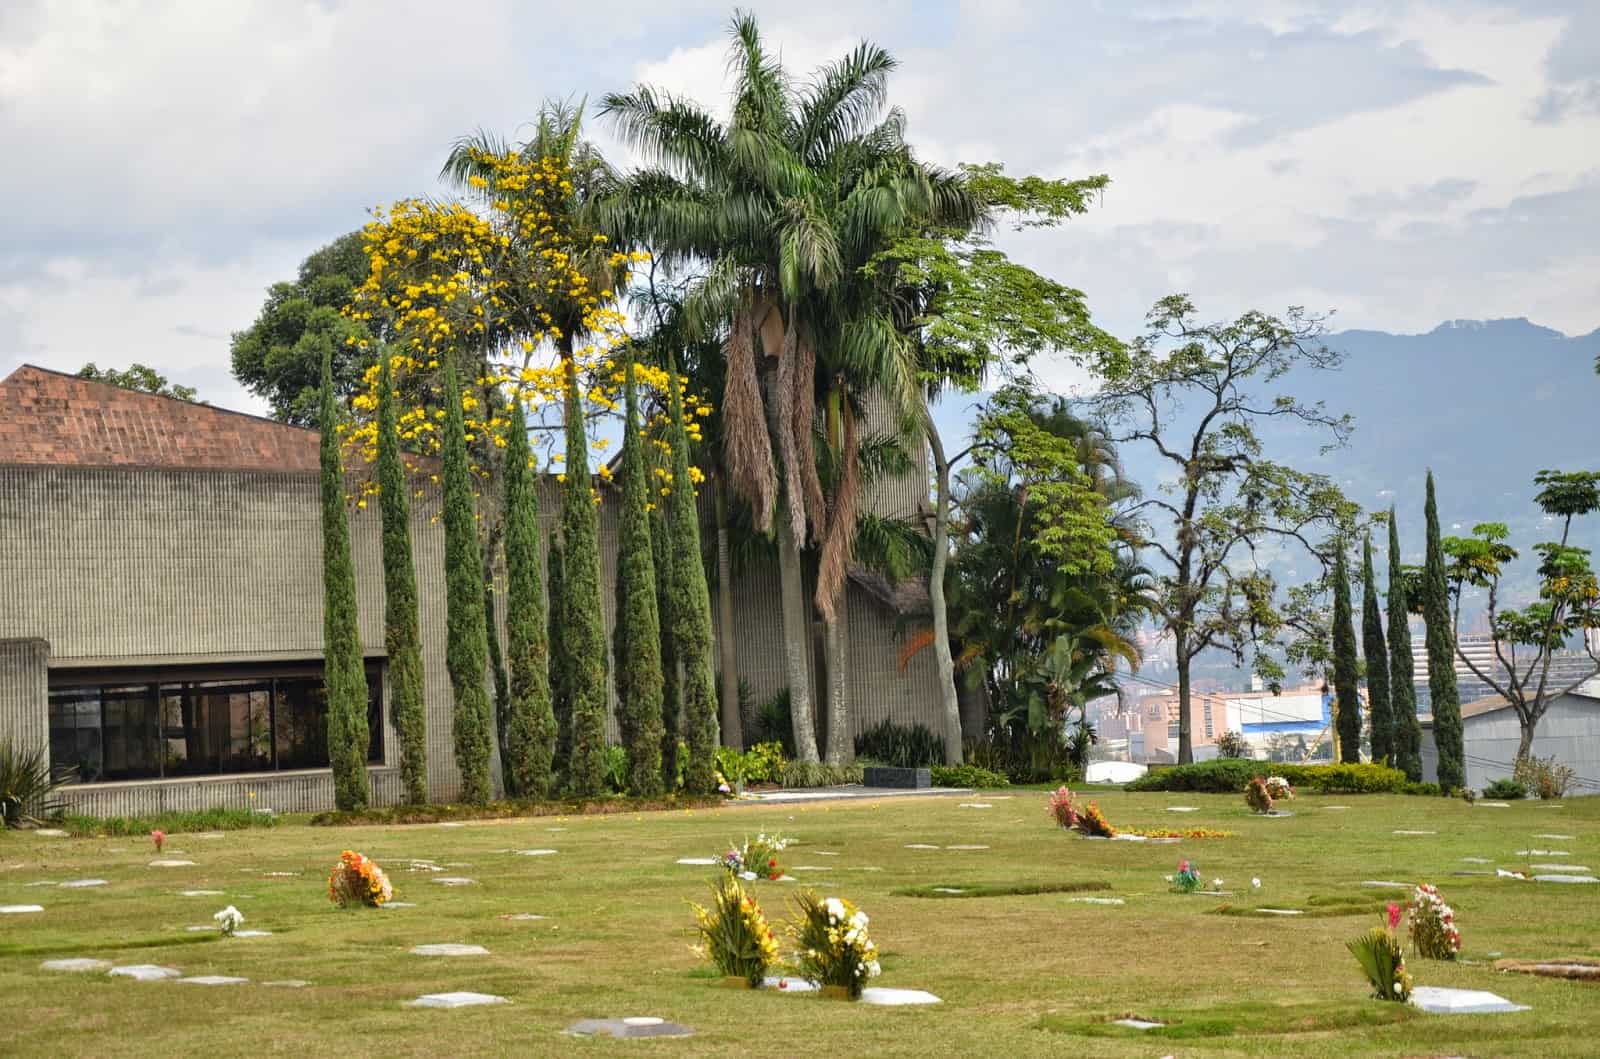 Montesacro Gardens Cemetery on the Pablo Escobar tour in Itagüí, Antioquia, Colombia